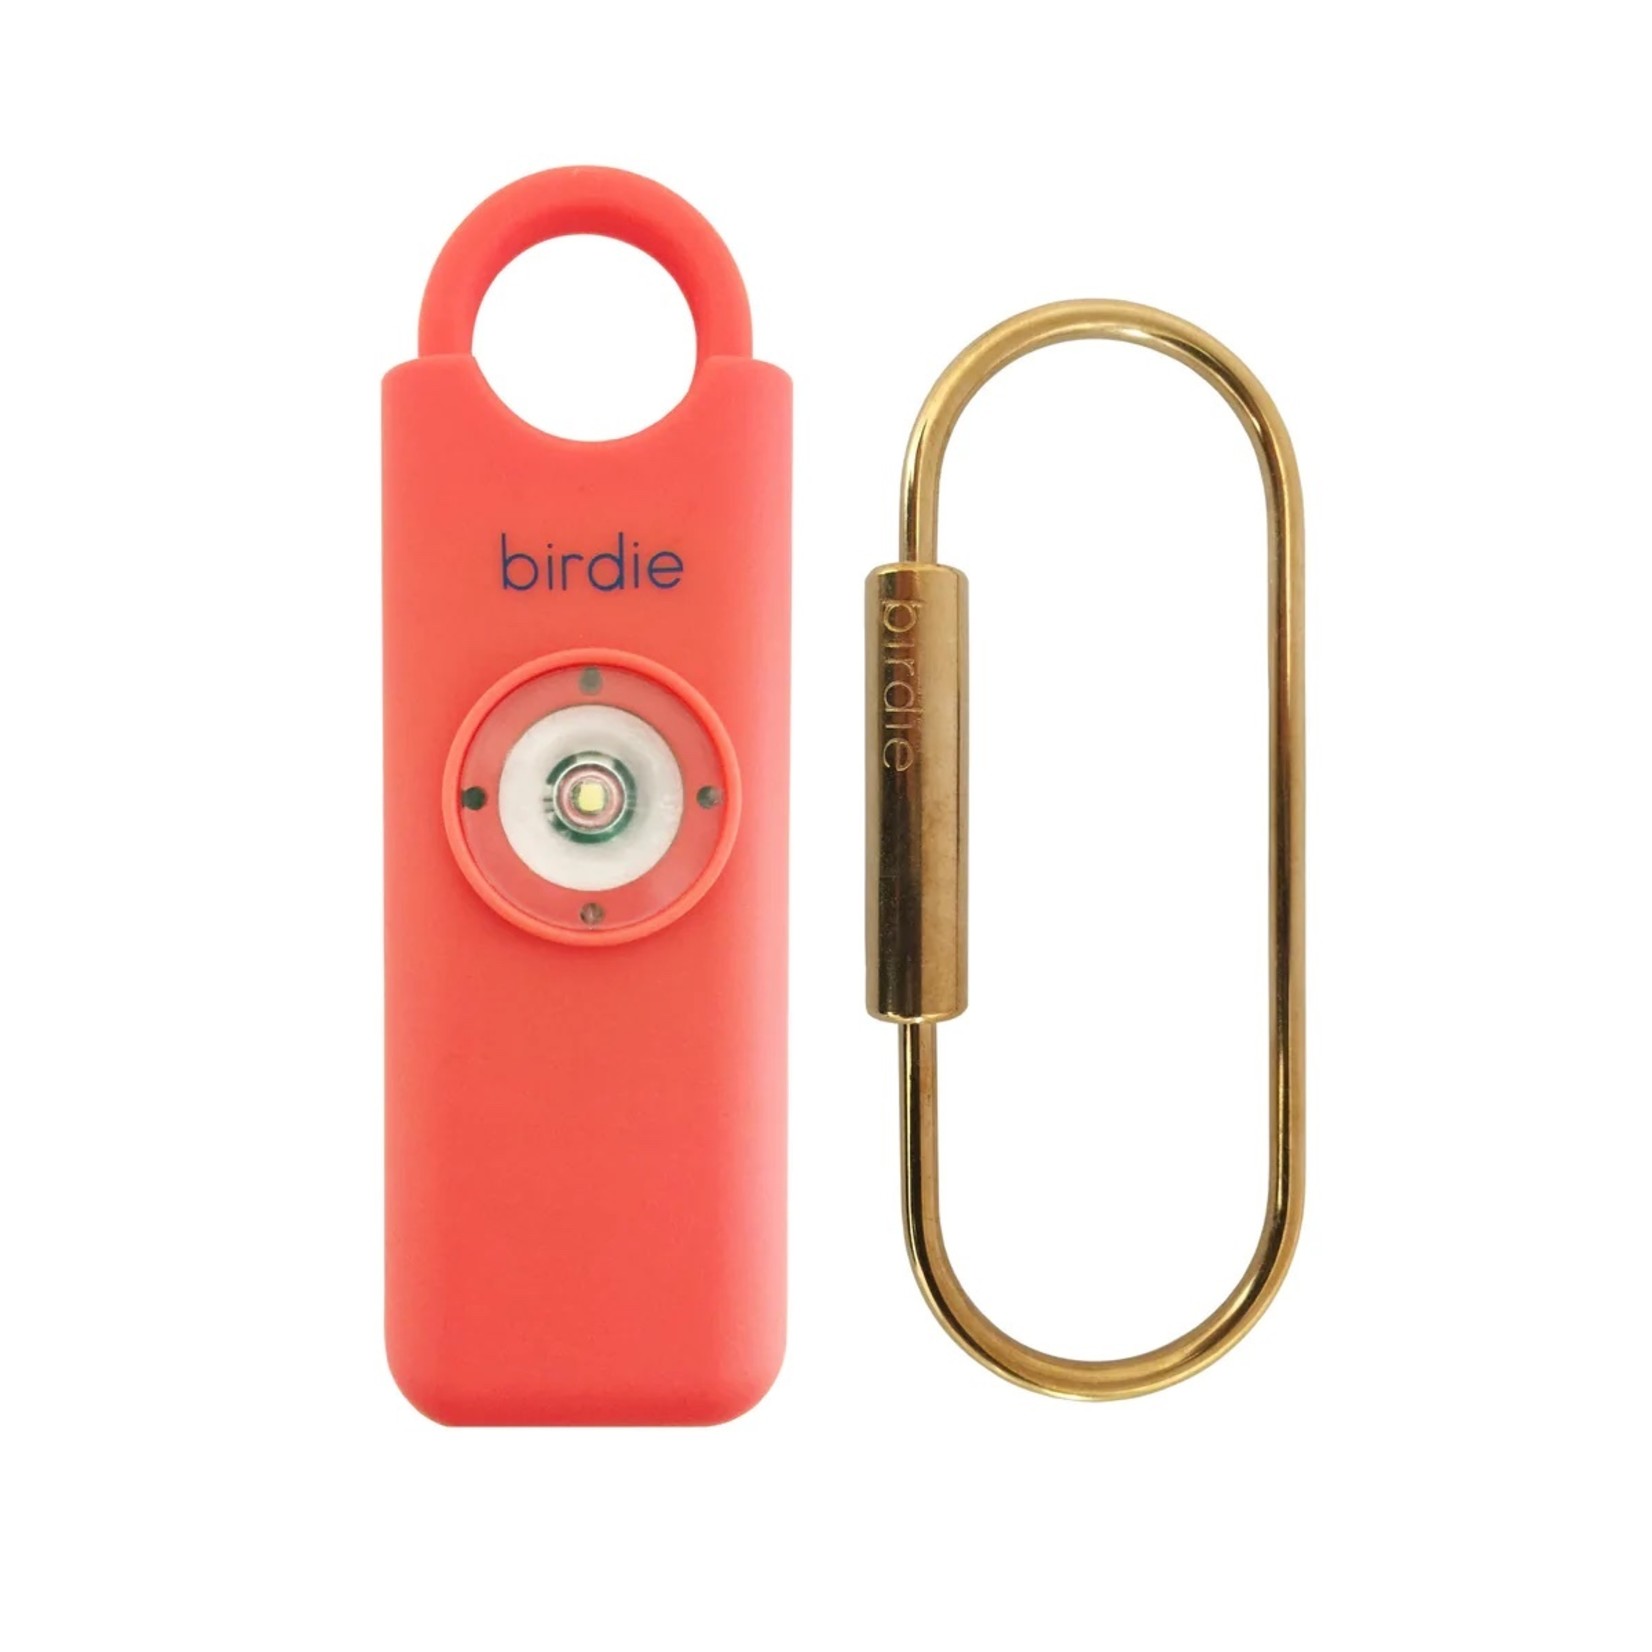 She's Birdie She's Birdie Personal Safety Alarm, Single